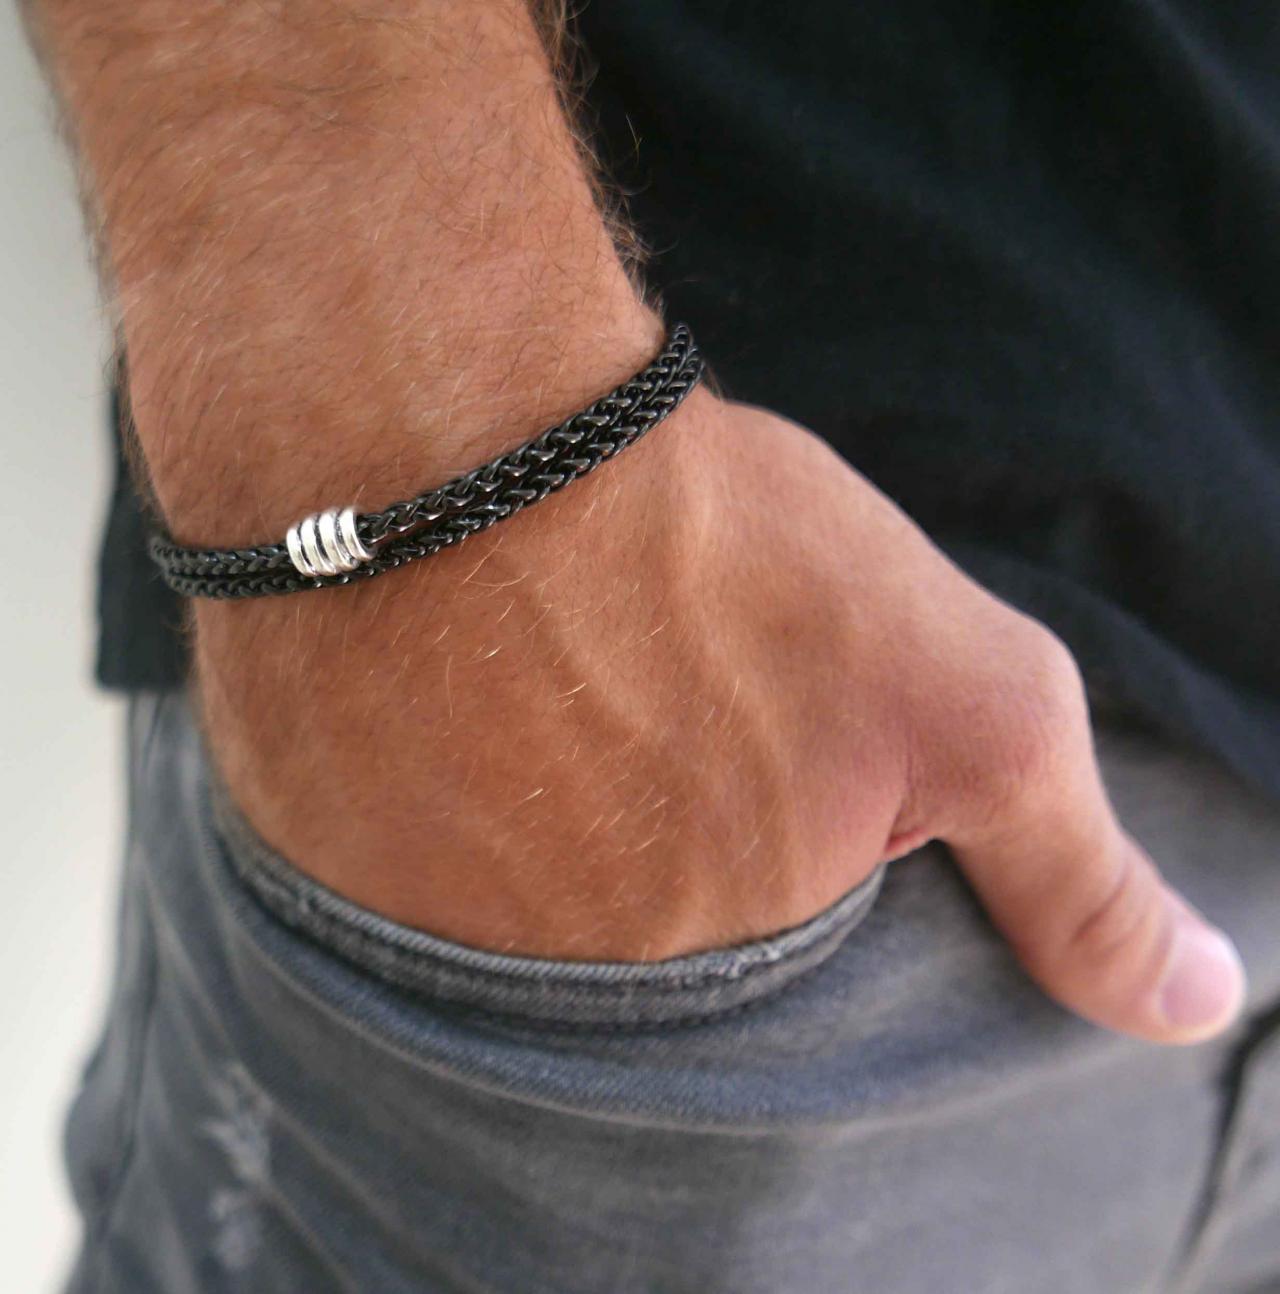 Men's Bracelet - Men's Chain Bracelet - Men's Cuff Bracelet - Men's Jewelry - Men's Gift - Husband